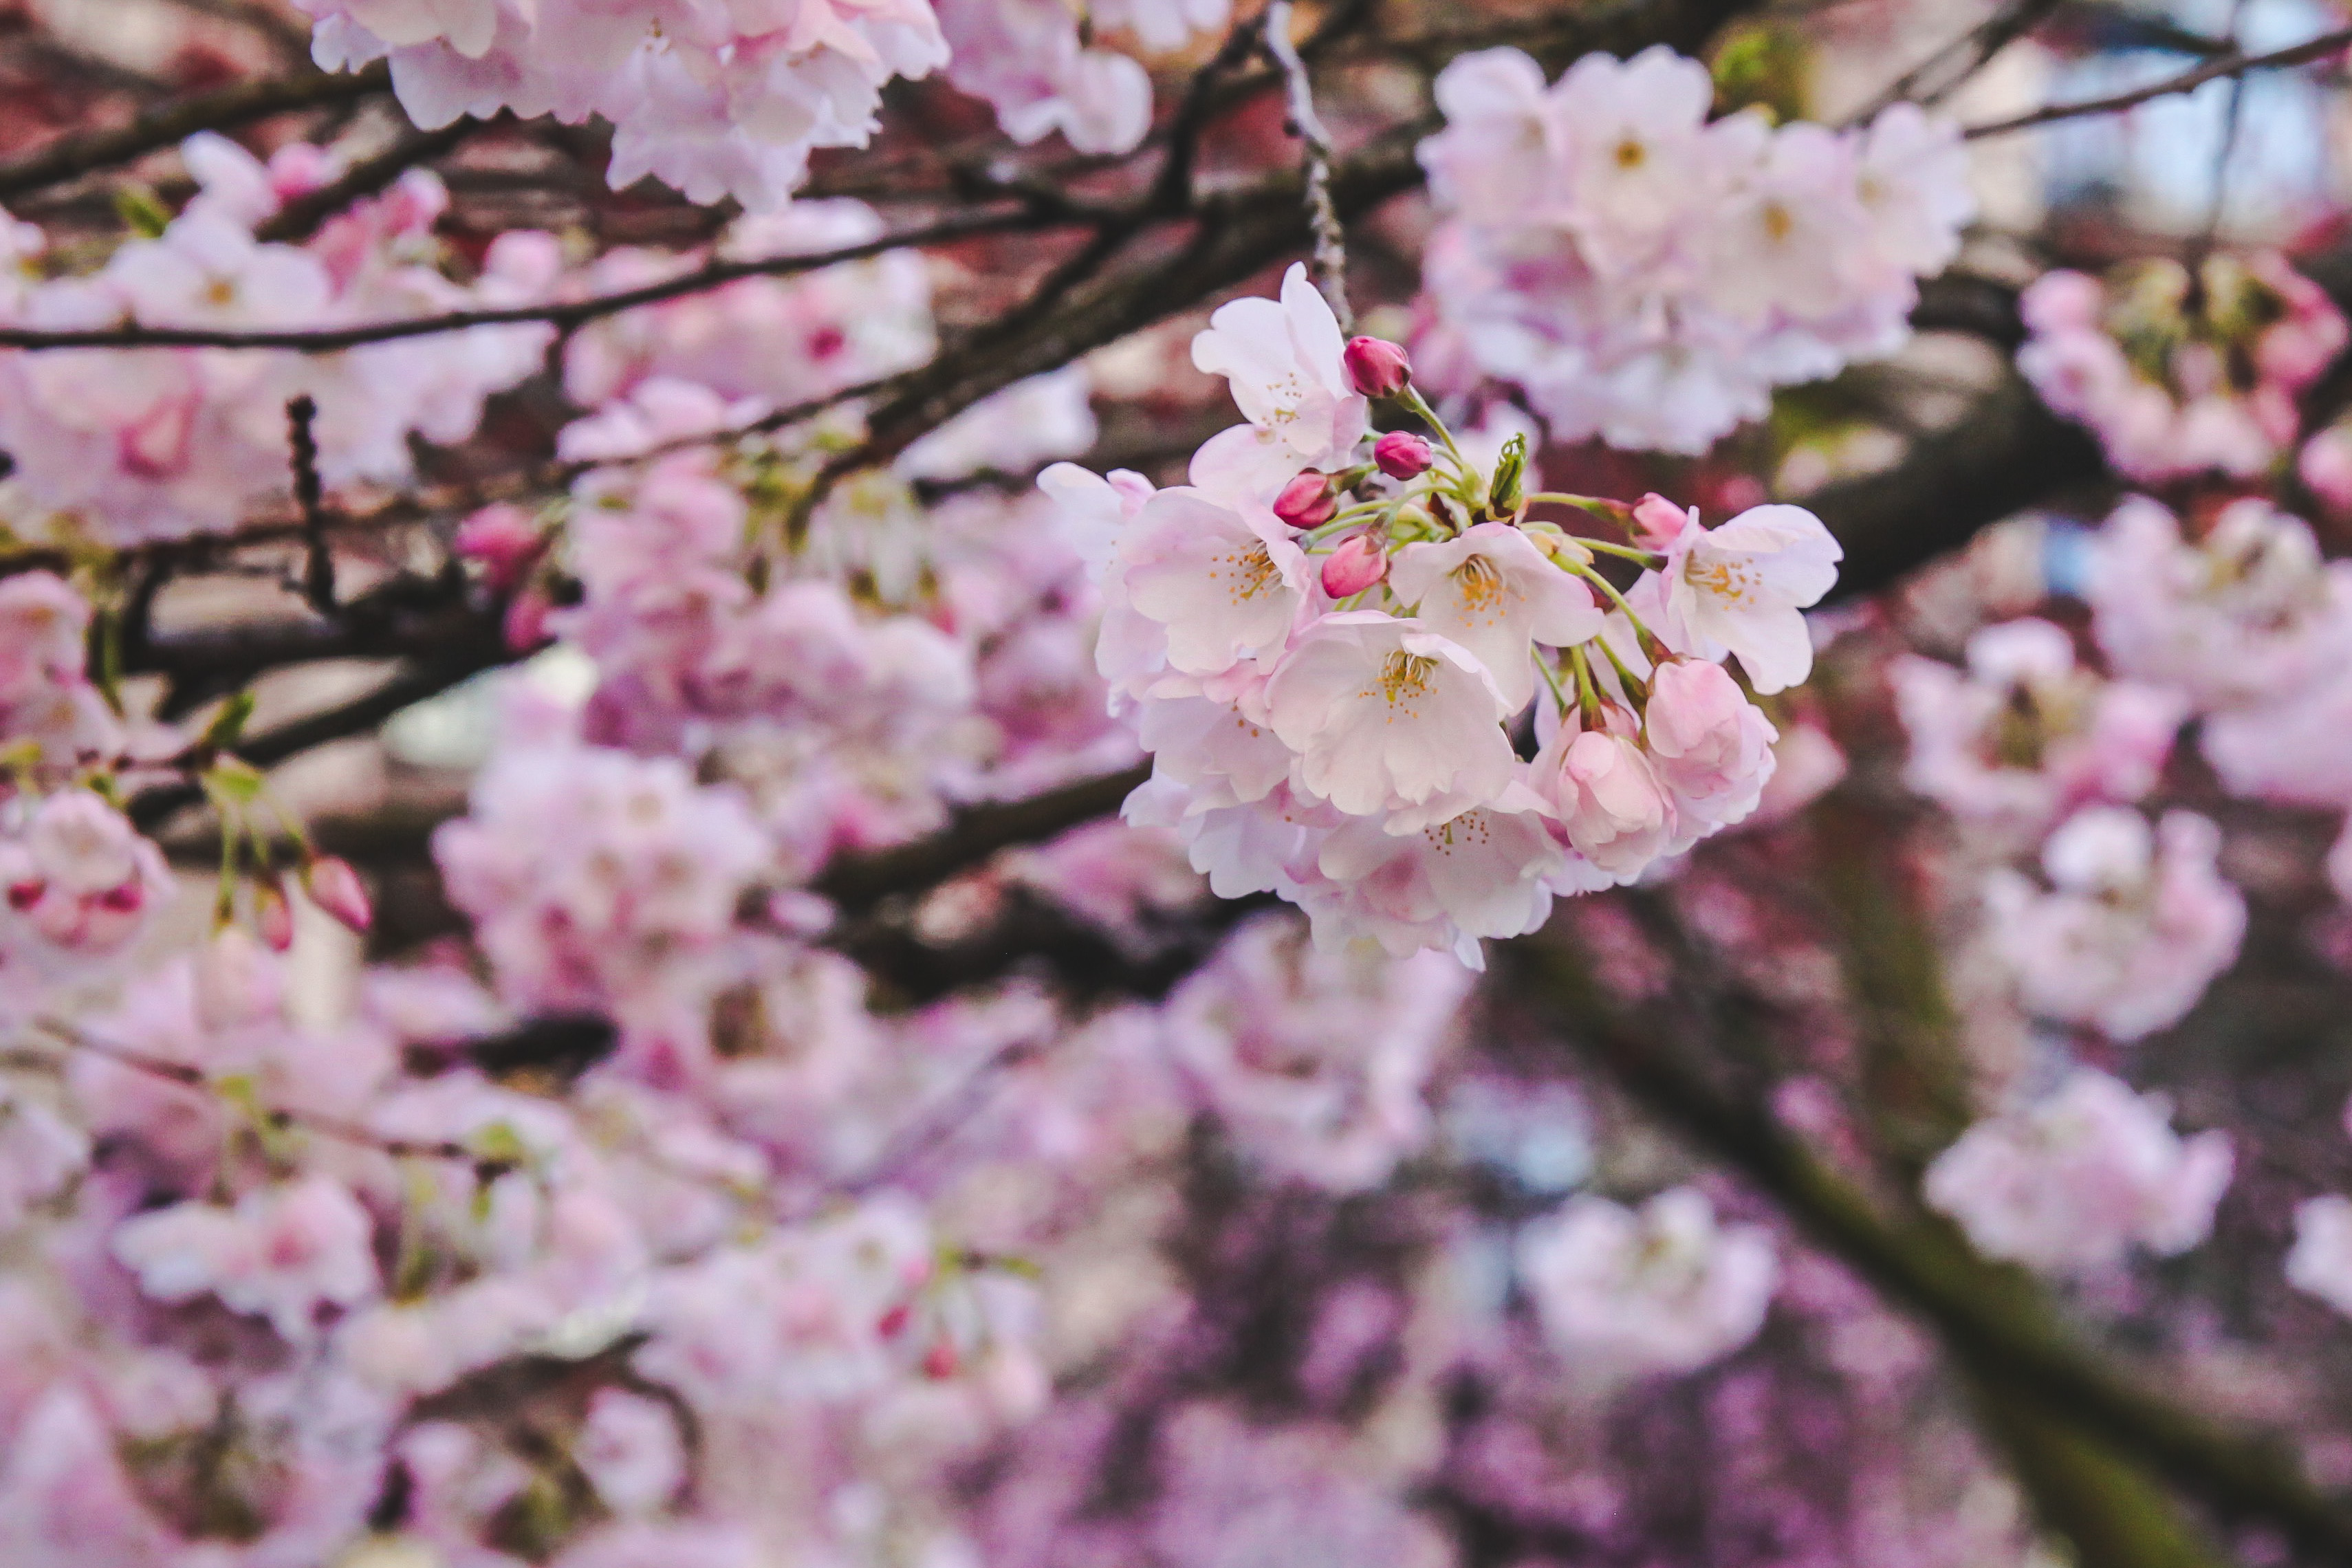 Vancouver's Cherry Blossom